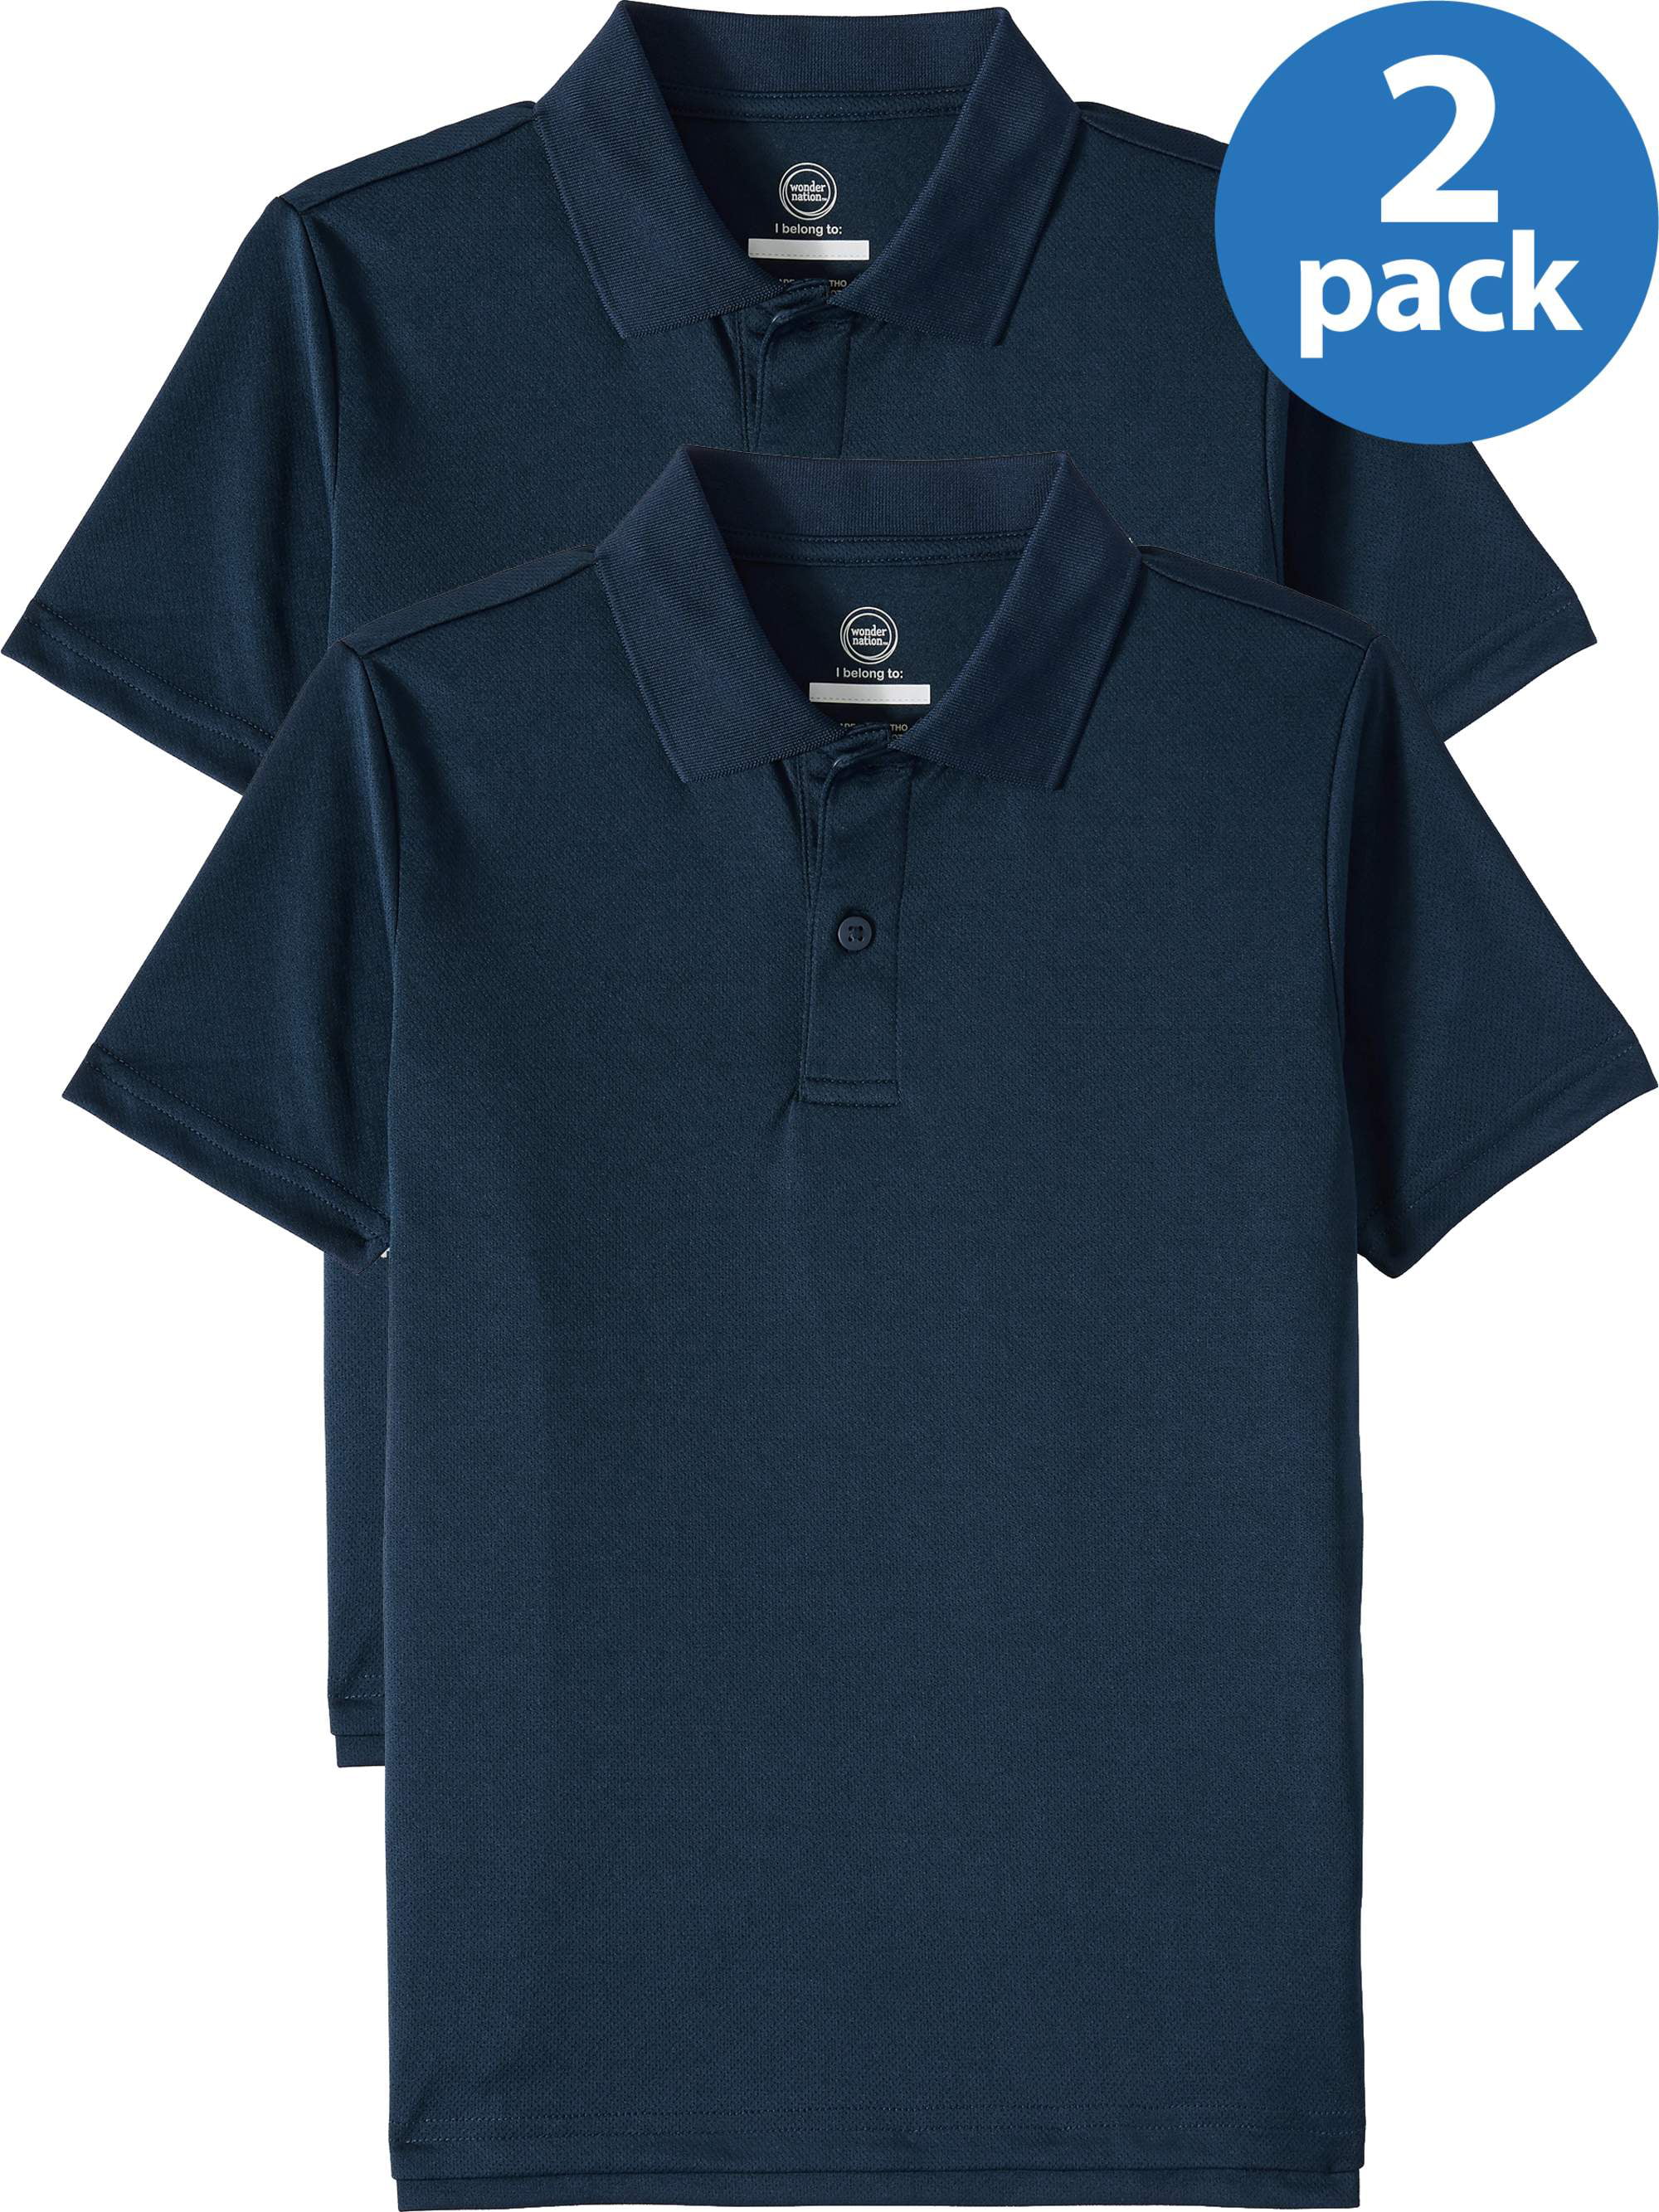 Pack Kids Childrens School Uniform Long Sleeve Polo Shirt Fruit of the Loom 5